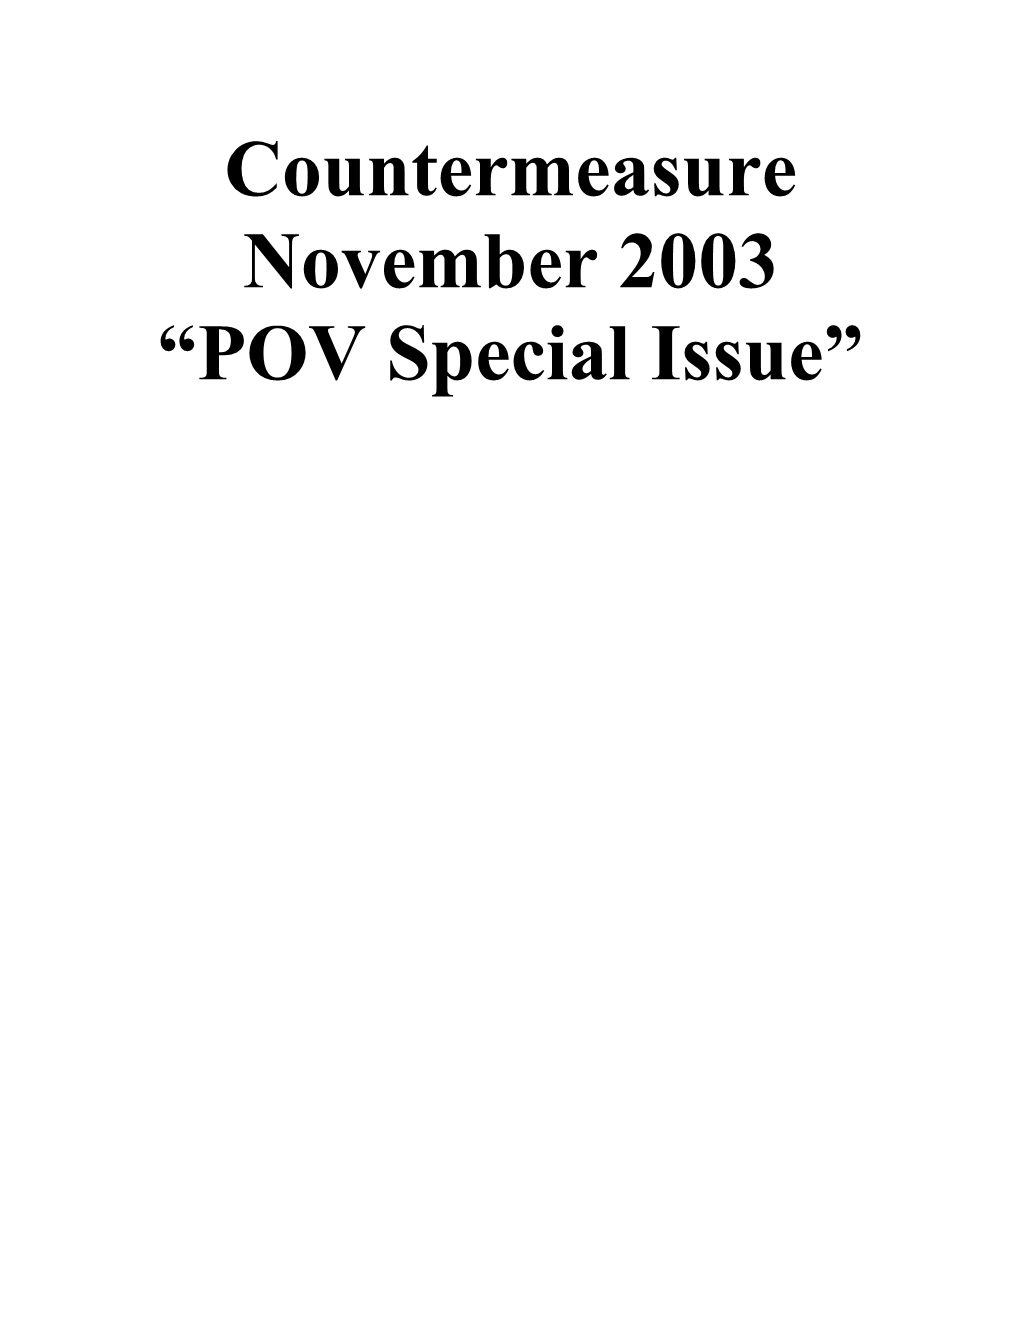 POV Special Issue